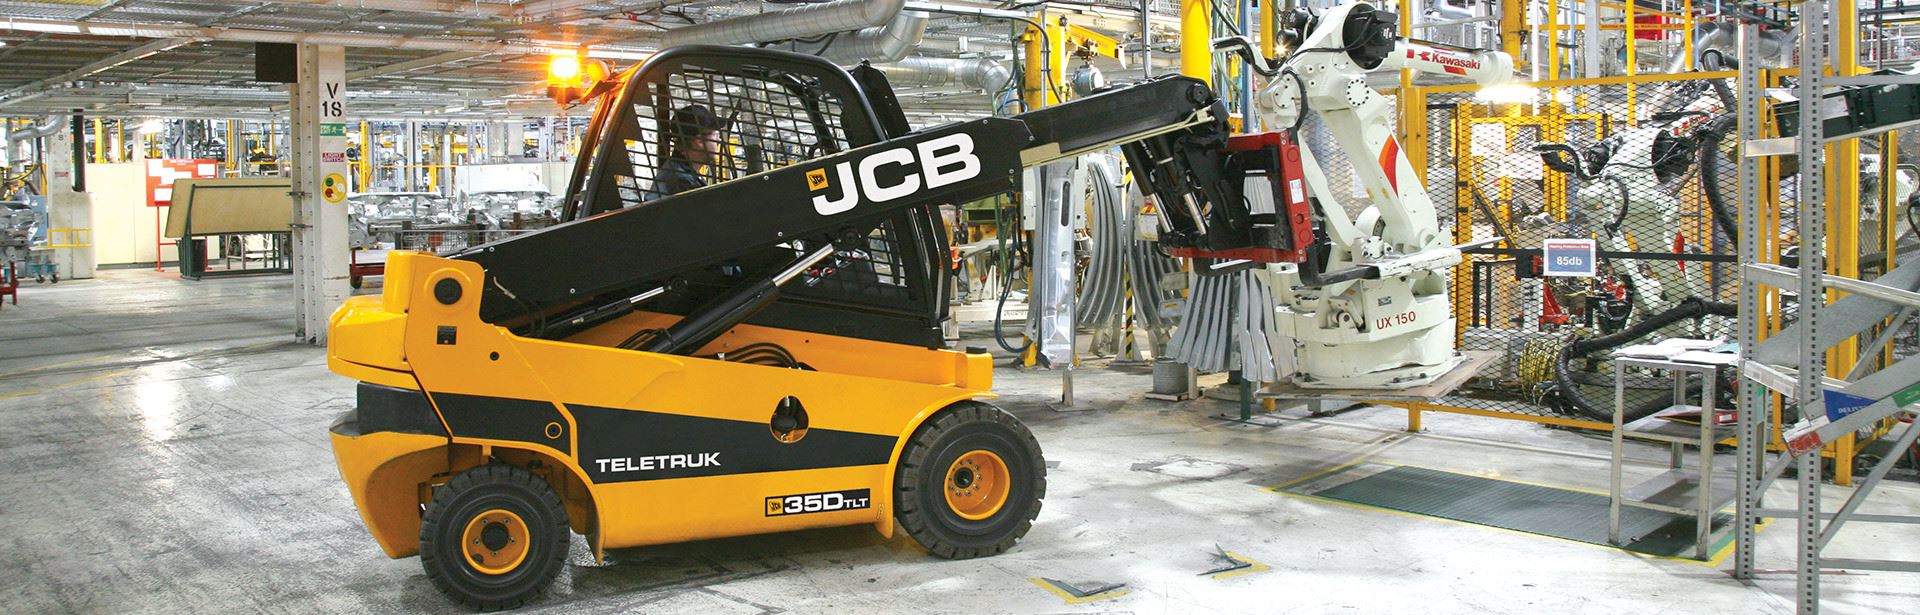 JCB Teletruck Forlift - Scot JCB